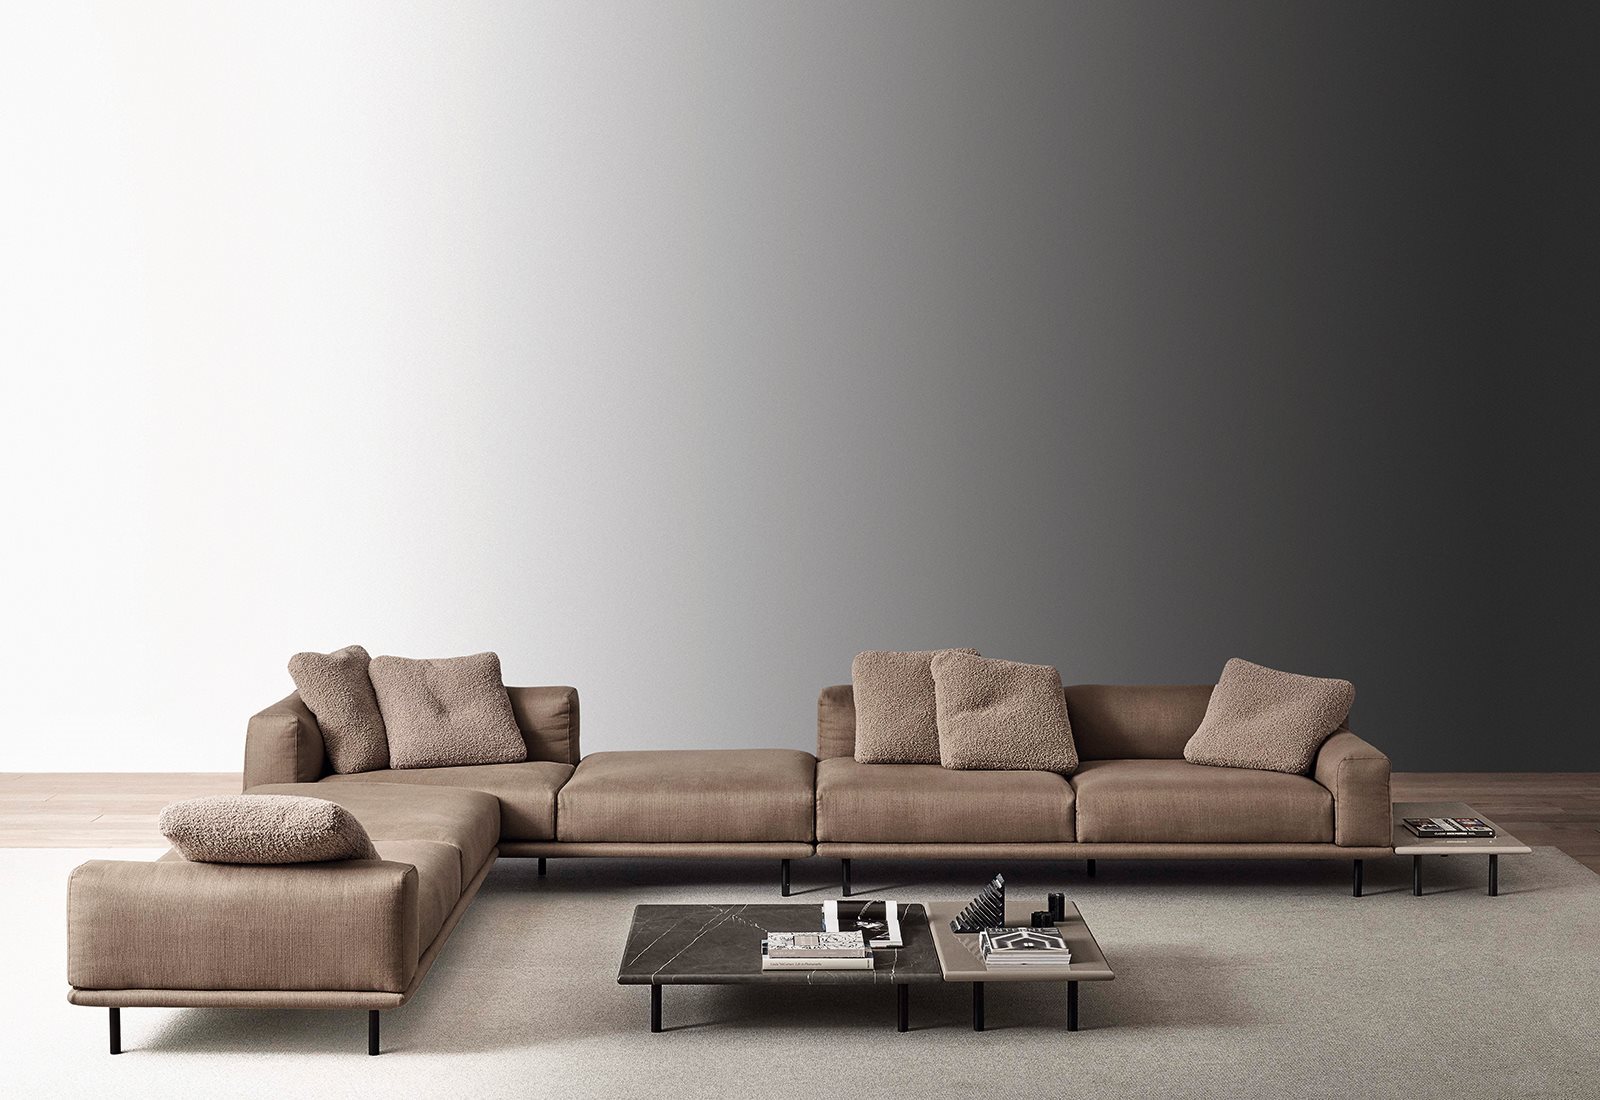 timothy-modular-sofa-01-1600x1100